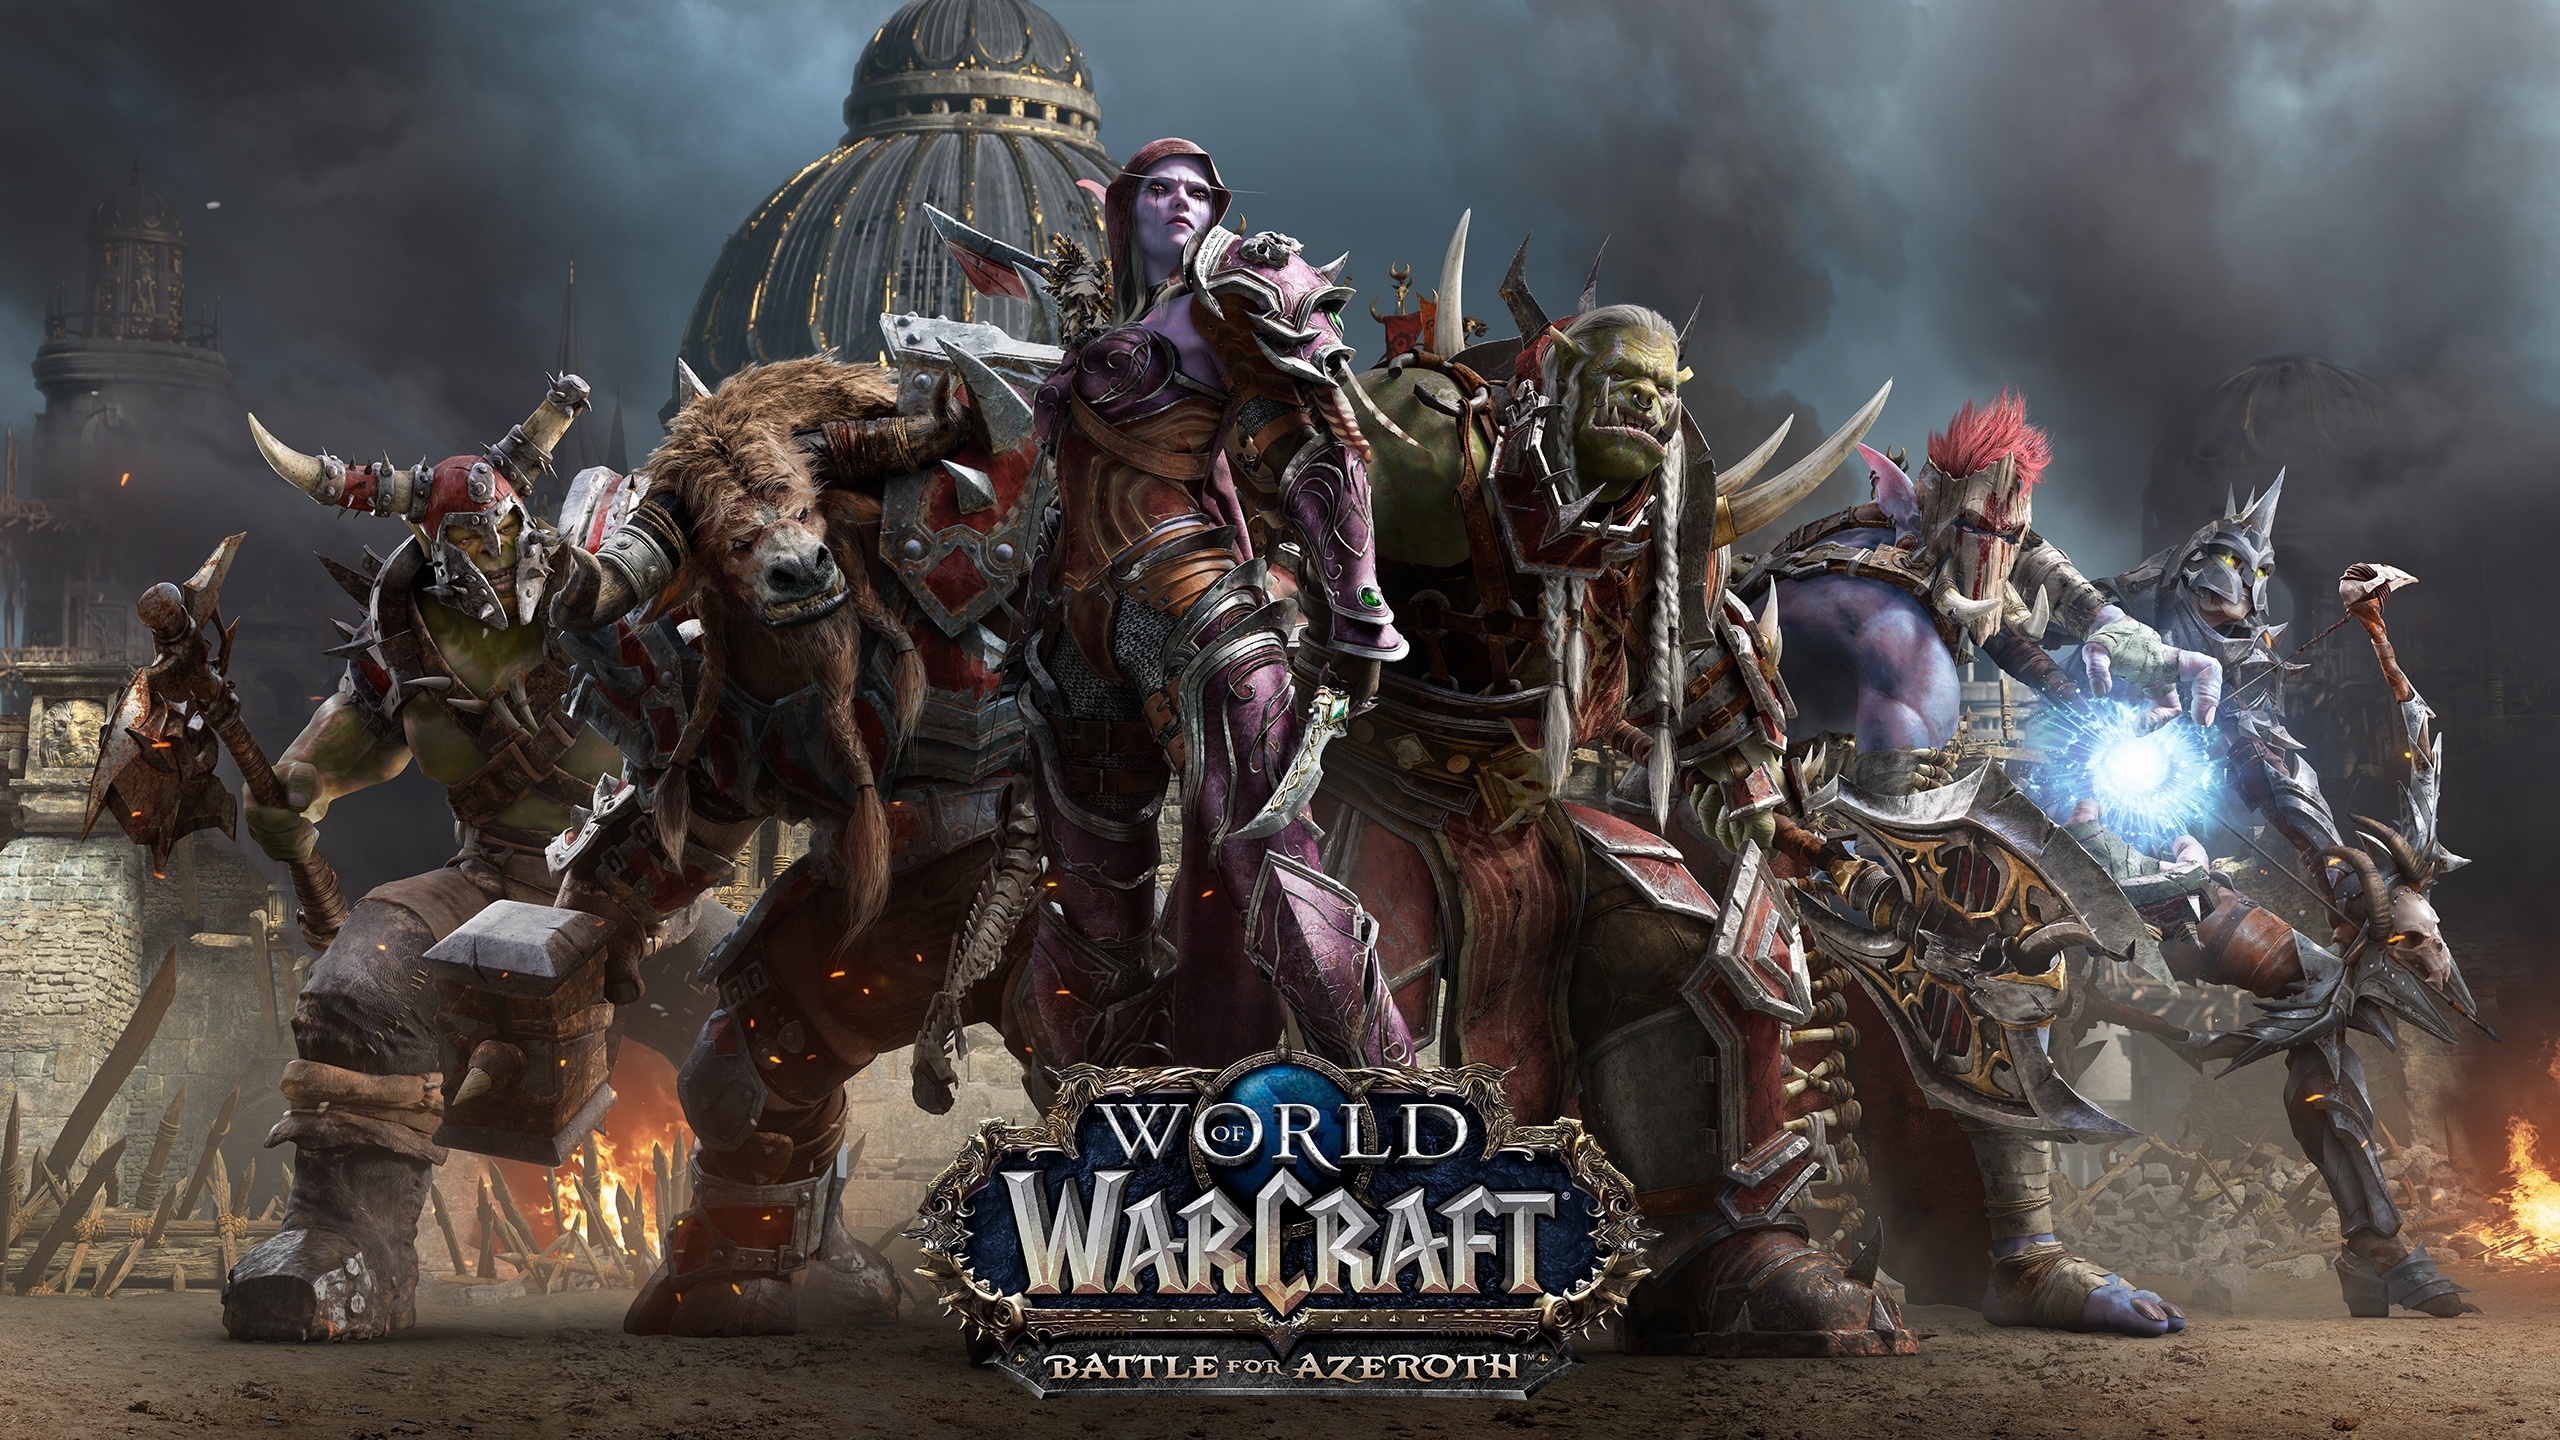 varok saurfang, video game, world of warcraft: battle for azeroth, horde (world of warcraft), sylvanas windrunner, world of warcraft